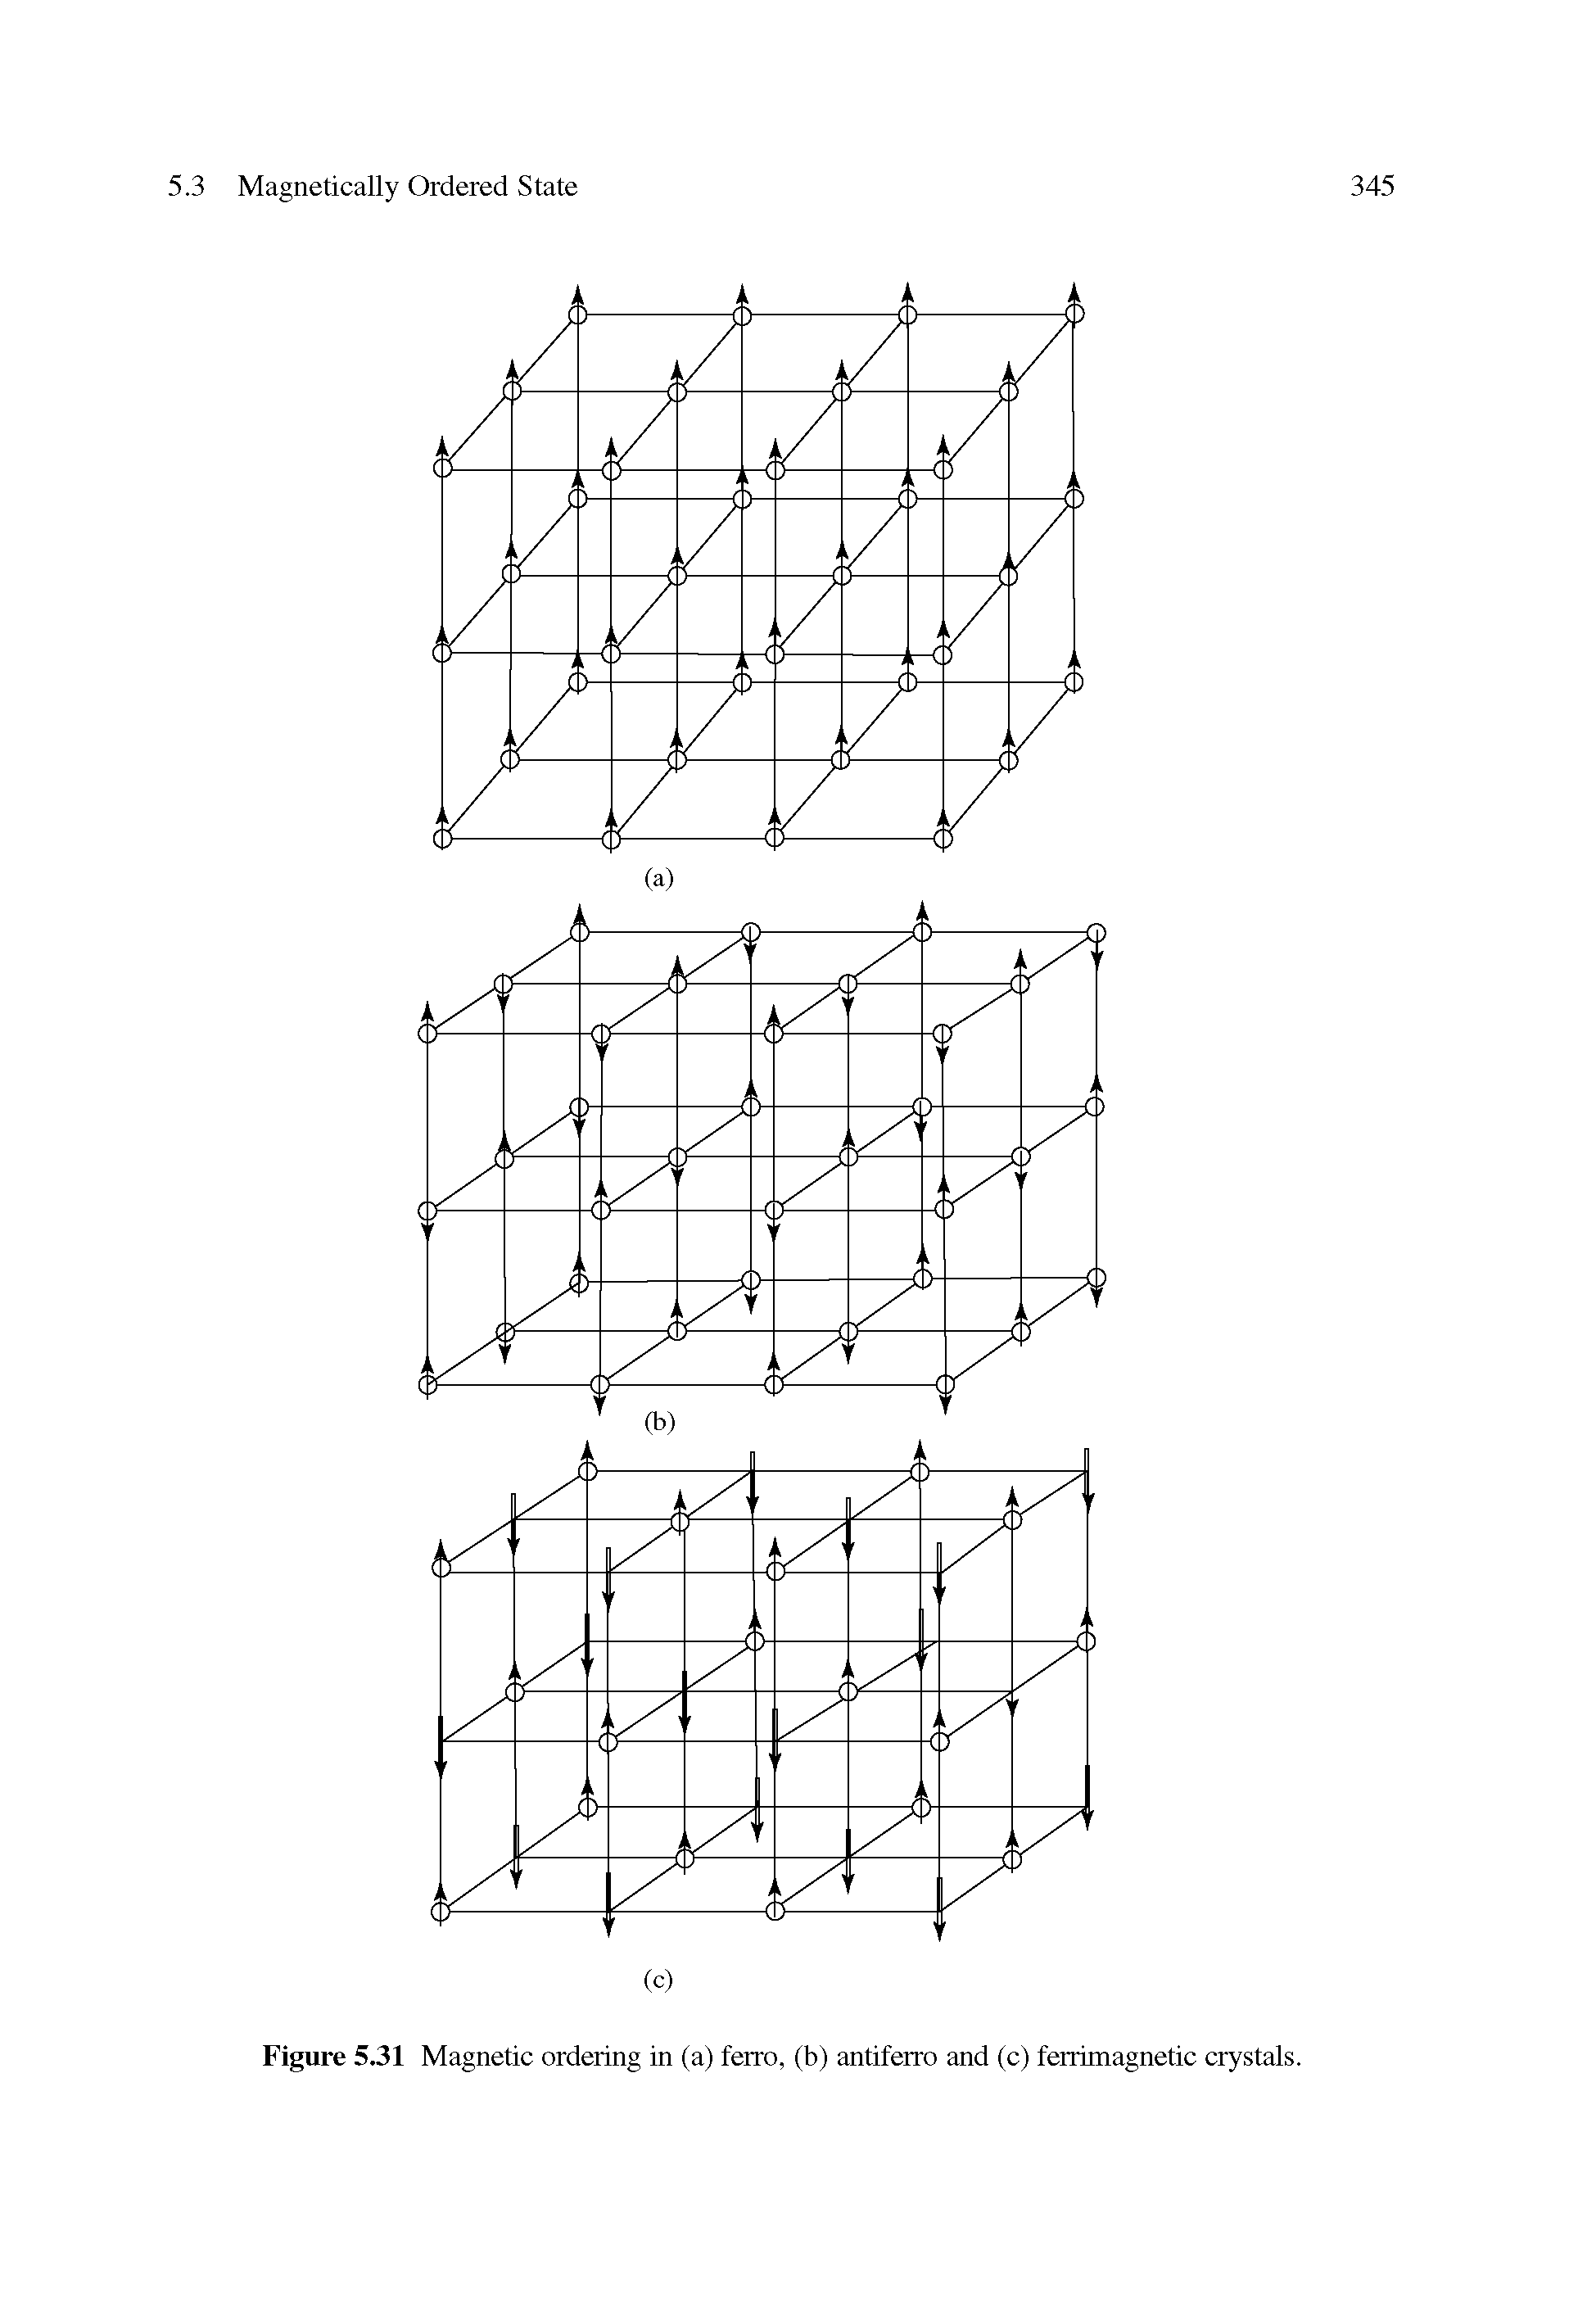 Figure 5.31 Magnetic ordering in (a) ferro, (b) antiferro and (c) ferrimagnetic crystals.